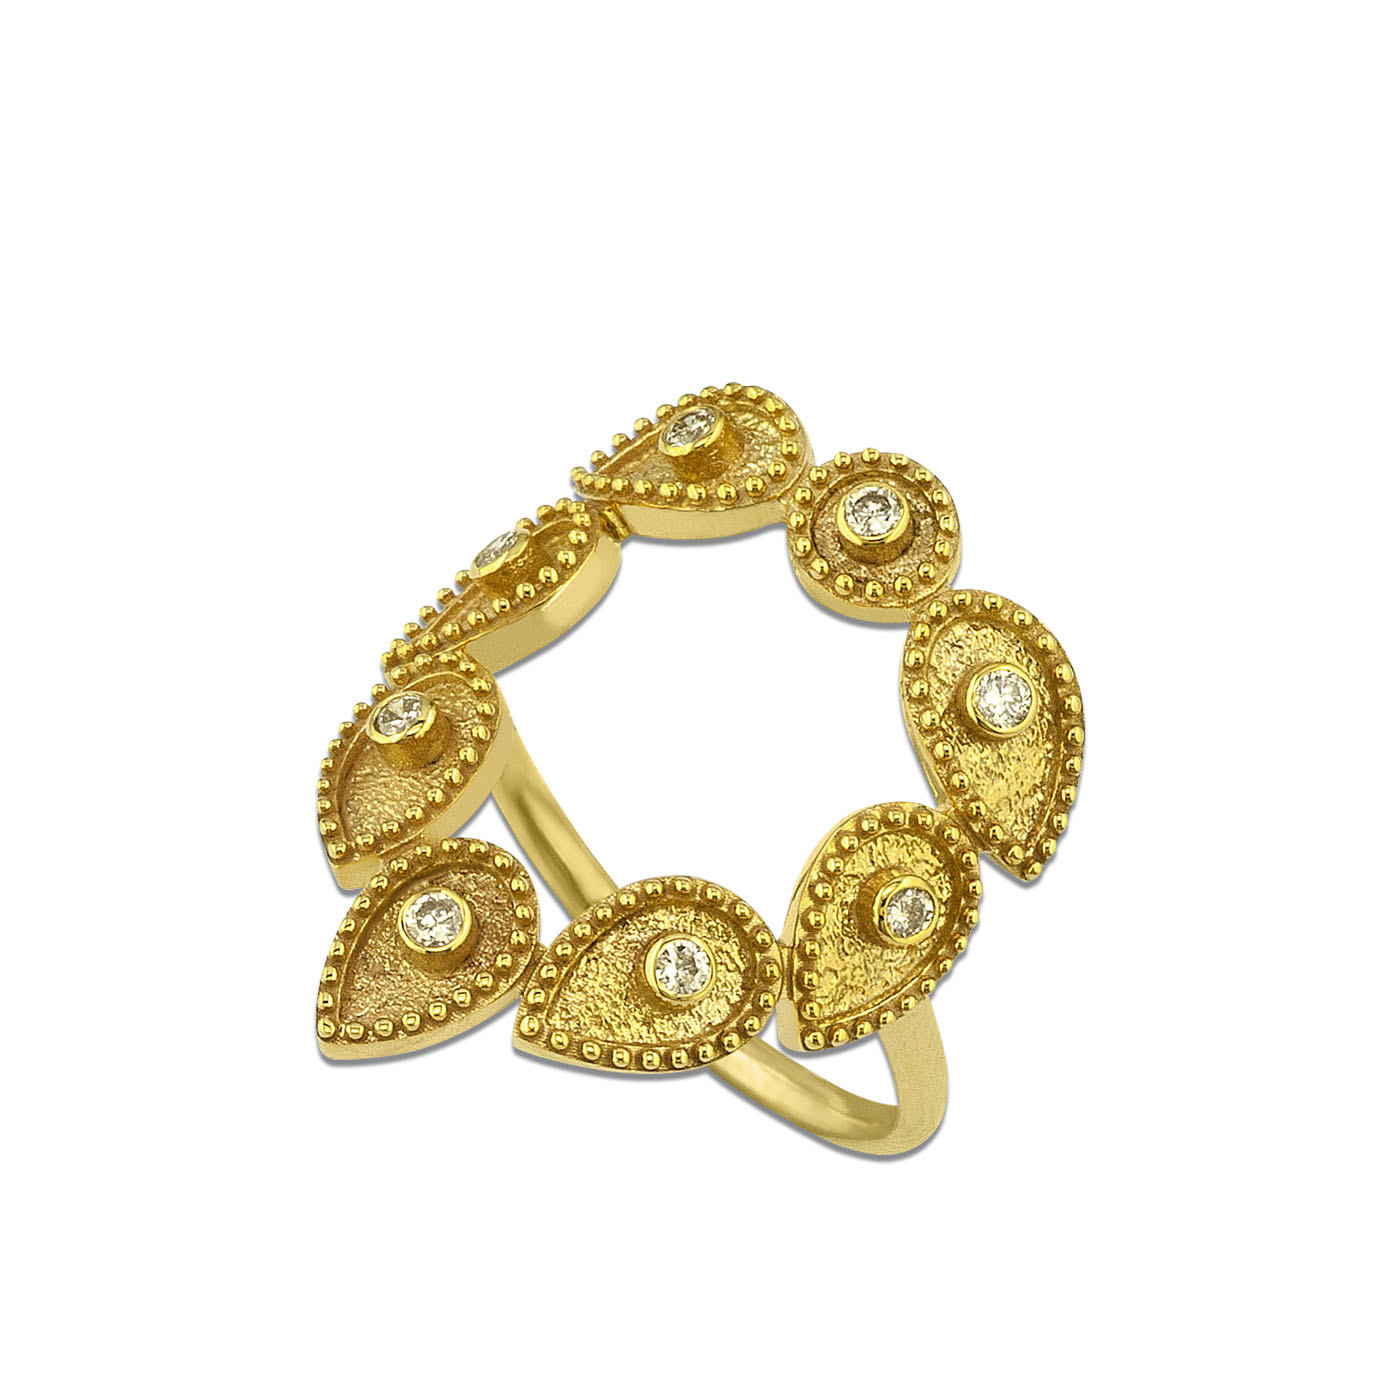 Gold geometric ring with diamonds